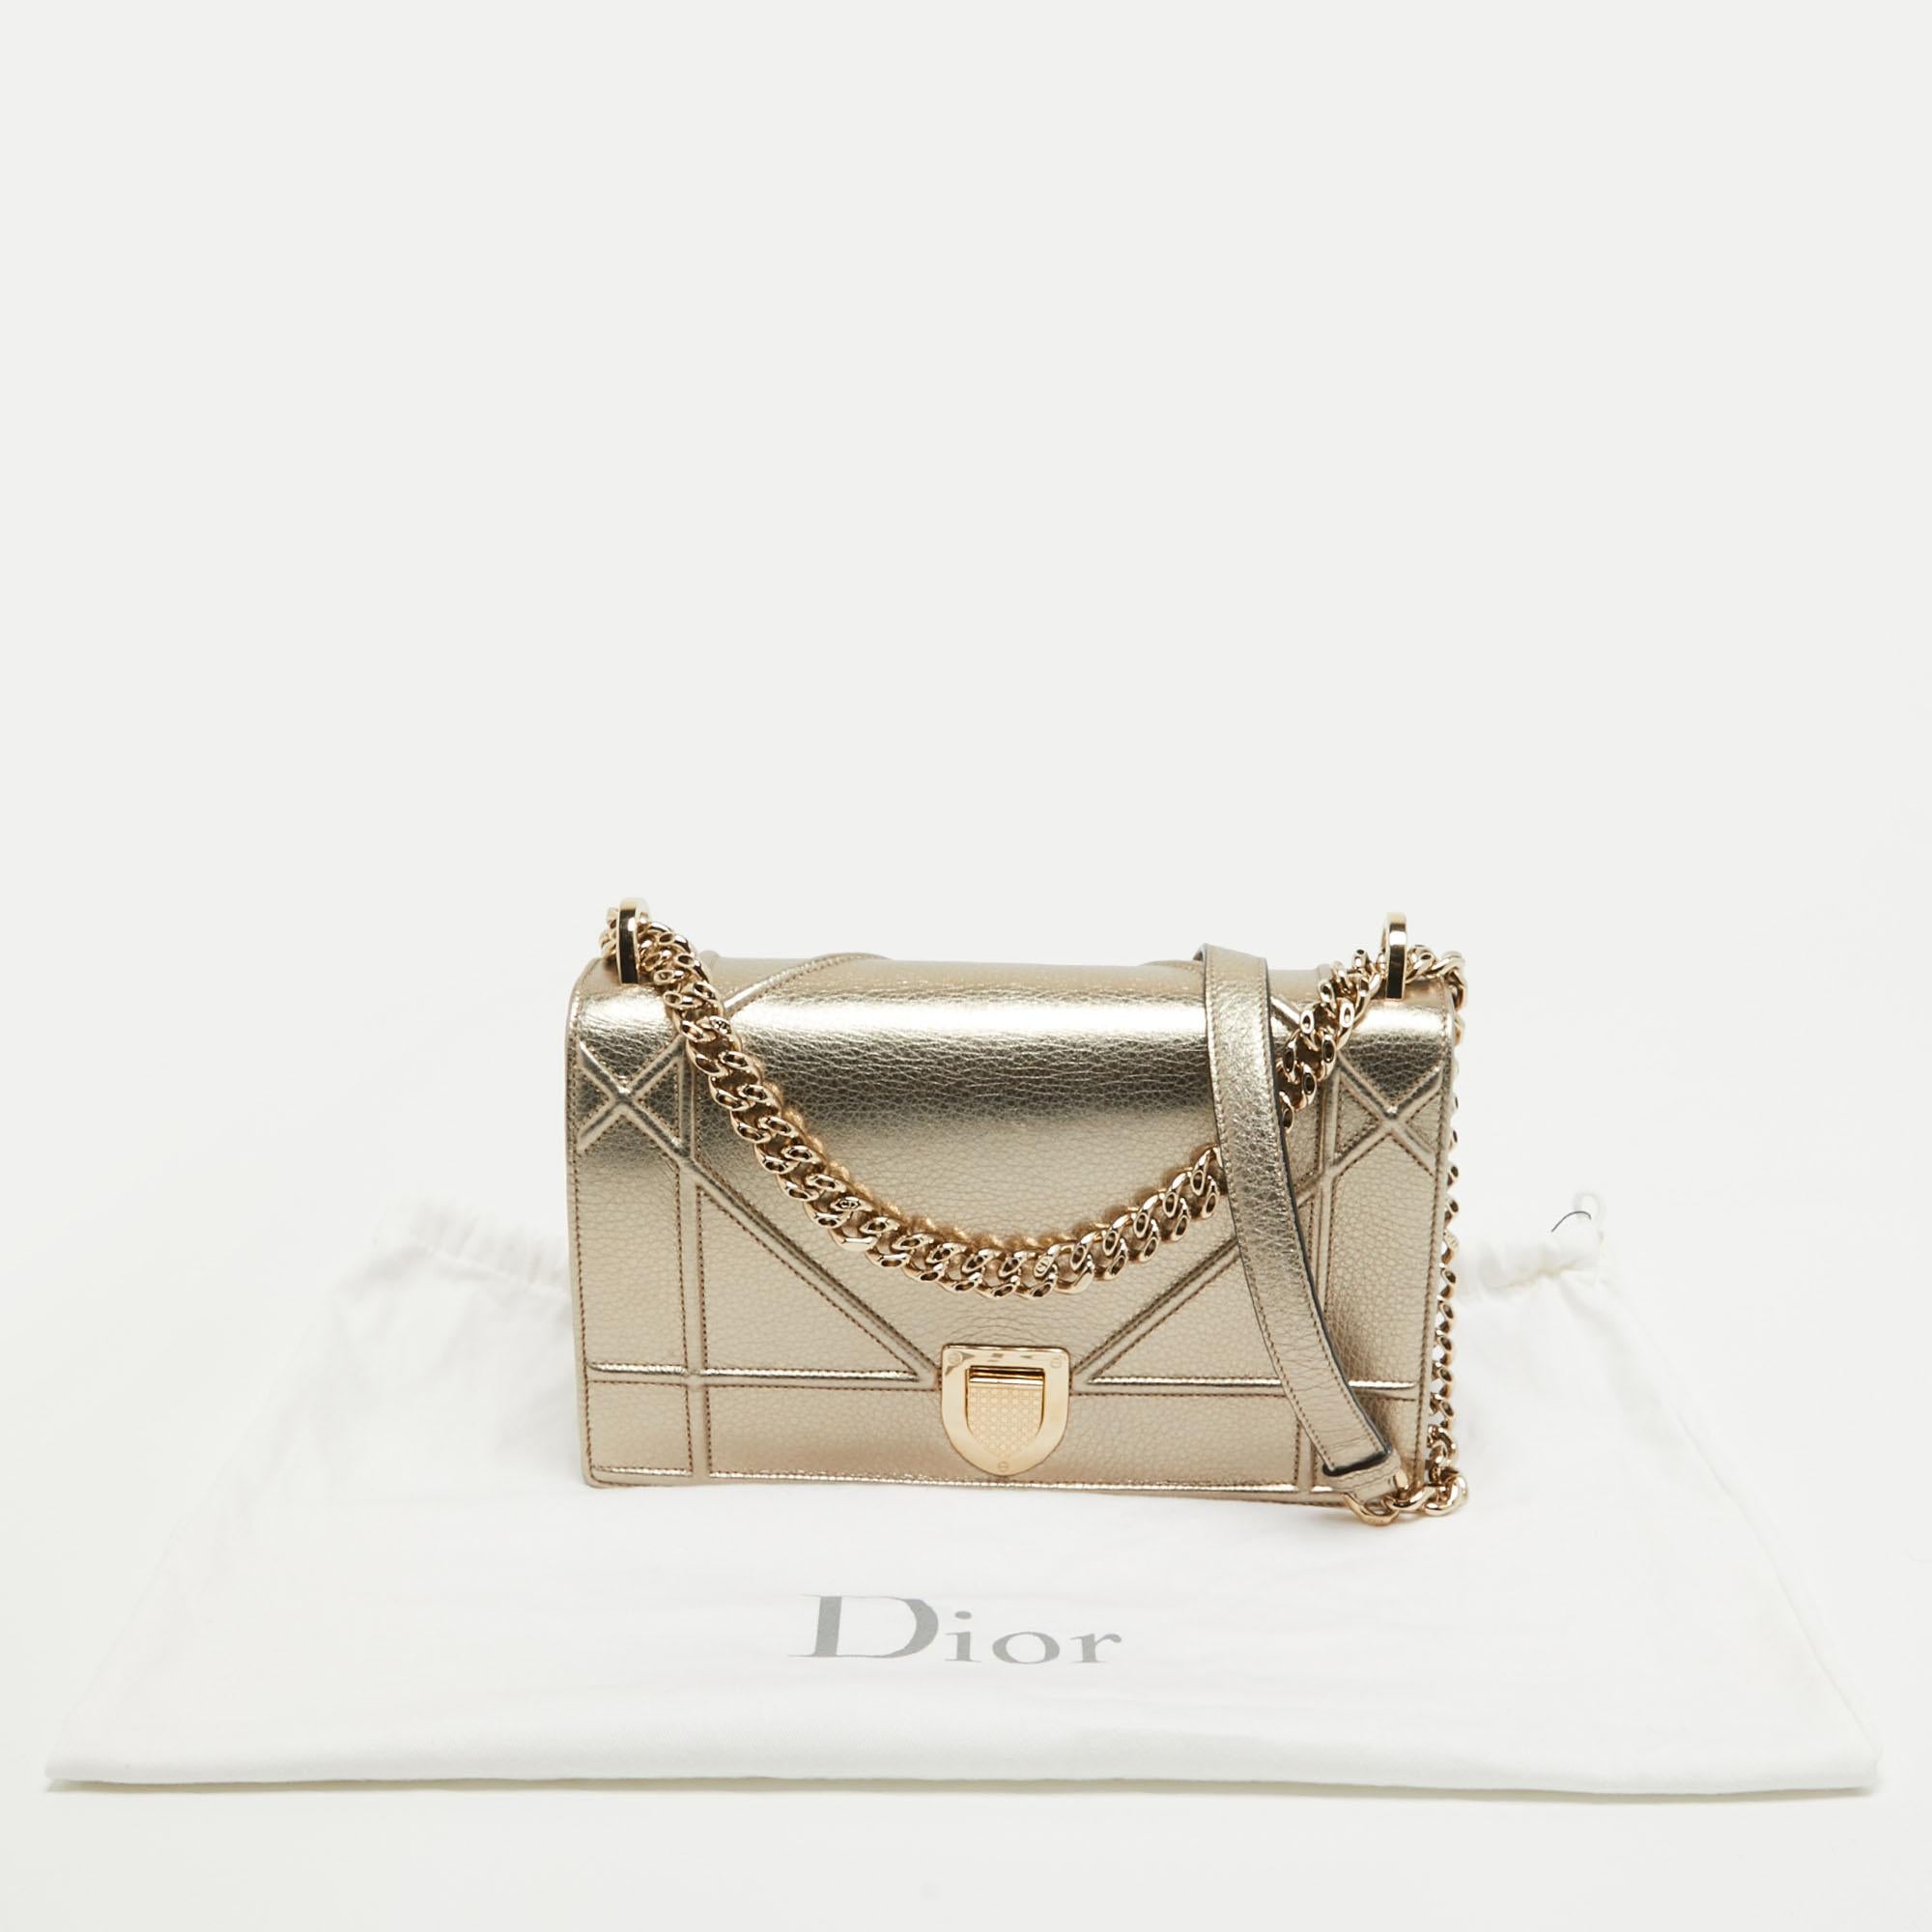 Dior Gold Leather Medium Diorama Shoulder Bag In Good Condition For Sale In Dubai, Al Qouz 2